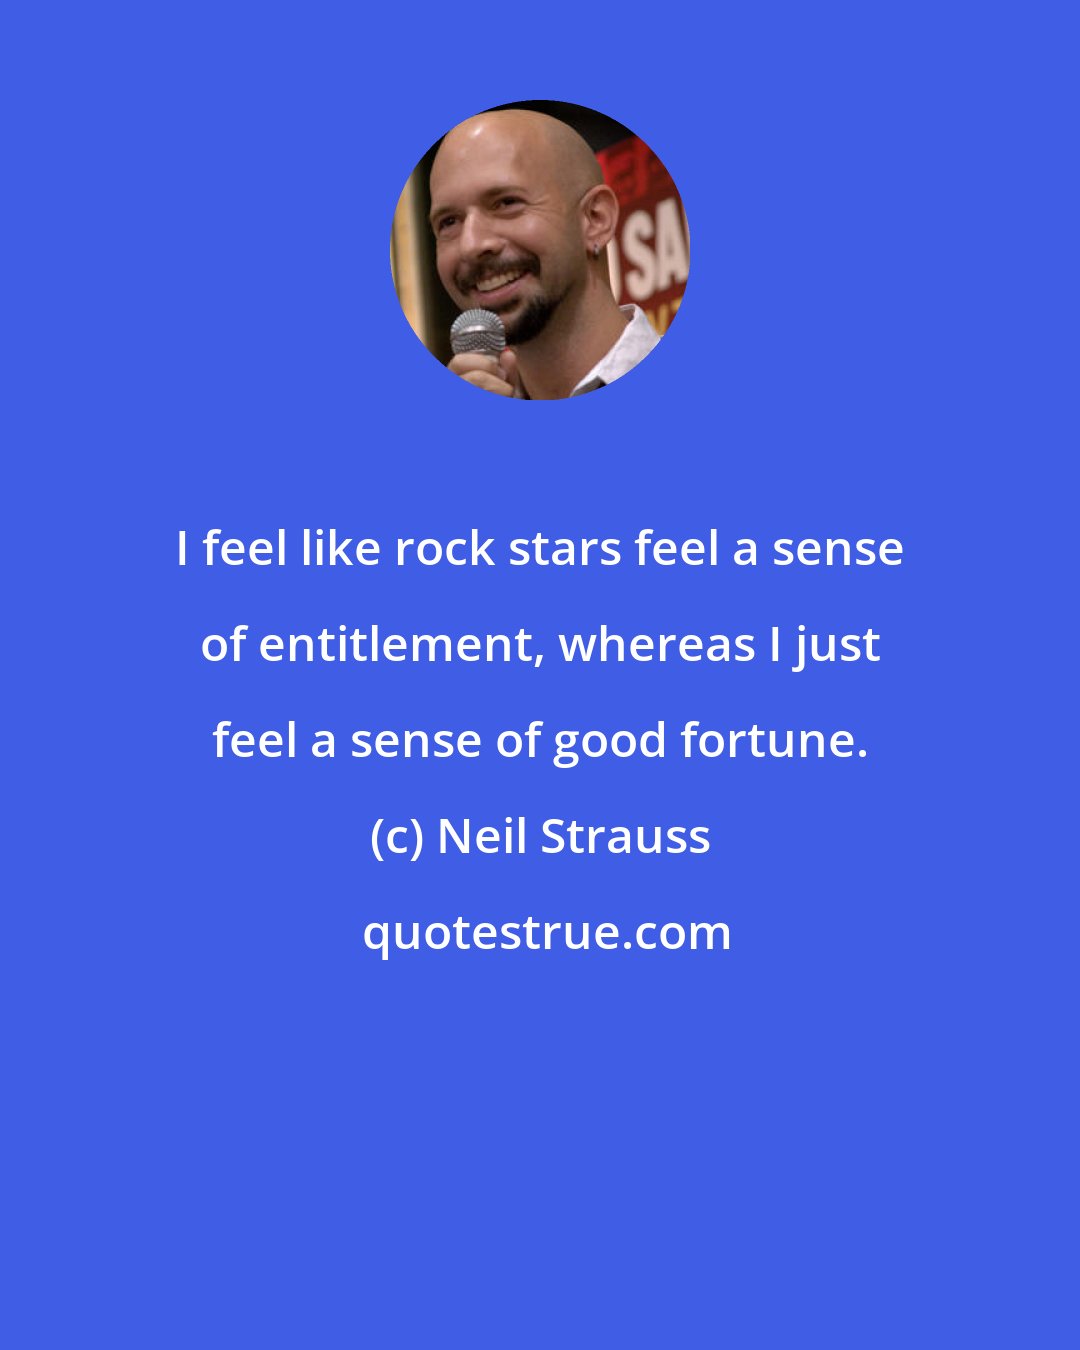 Neil Strauss: I feel like rock stars feel a sense of entitlement, whereas I just feel a sense of good fortune.